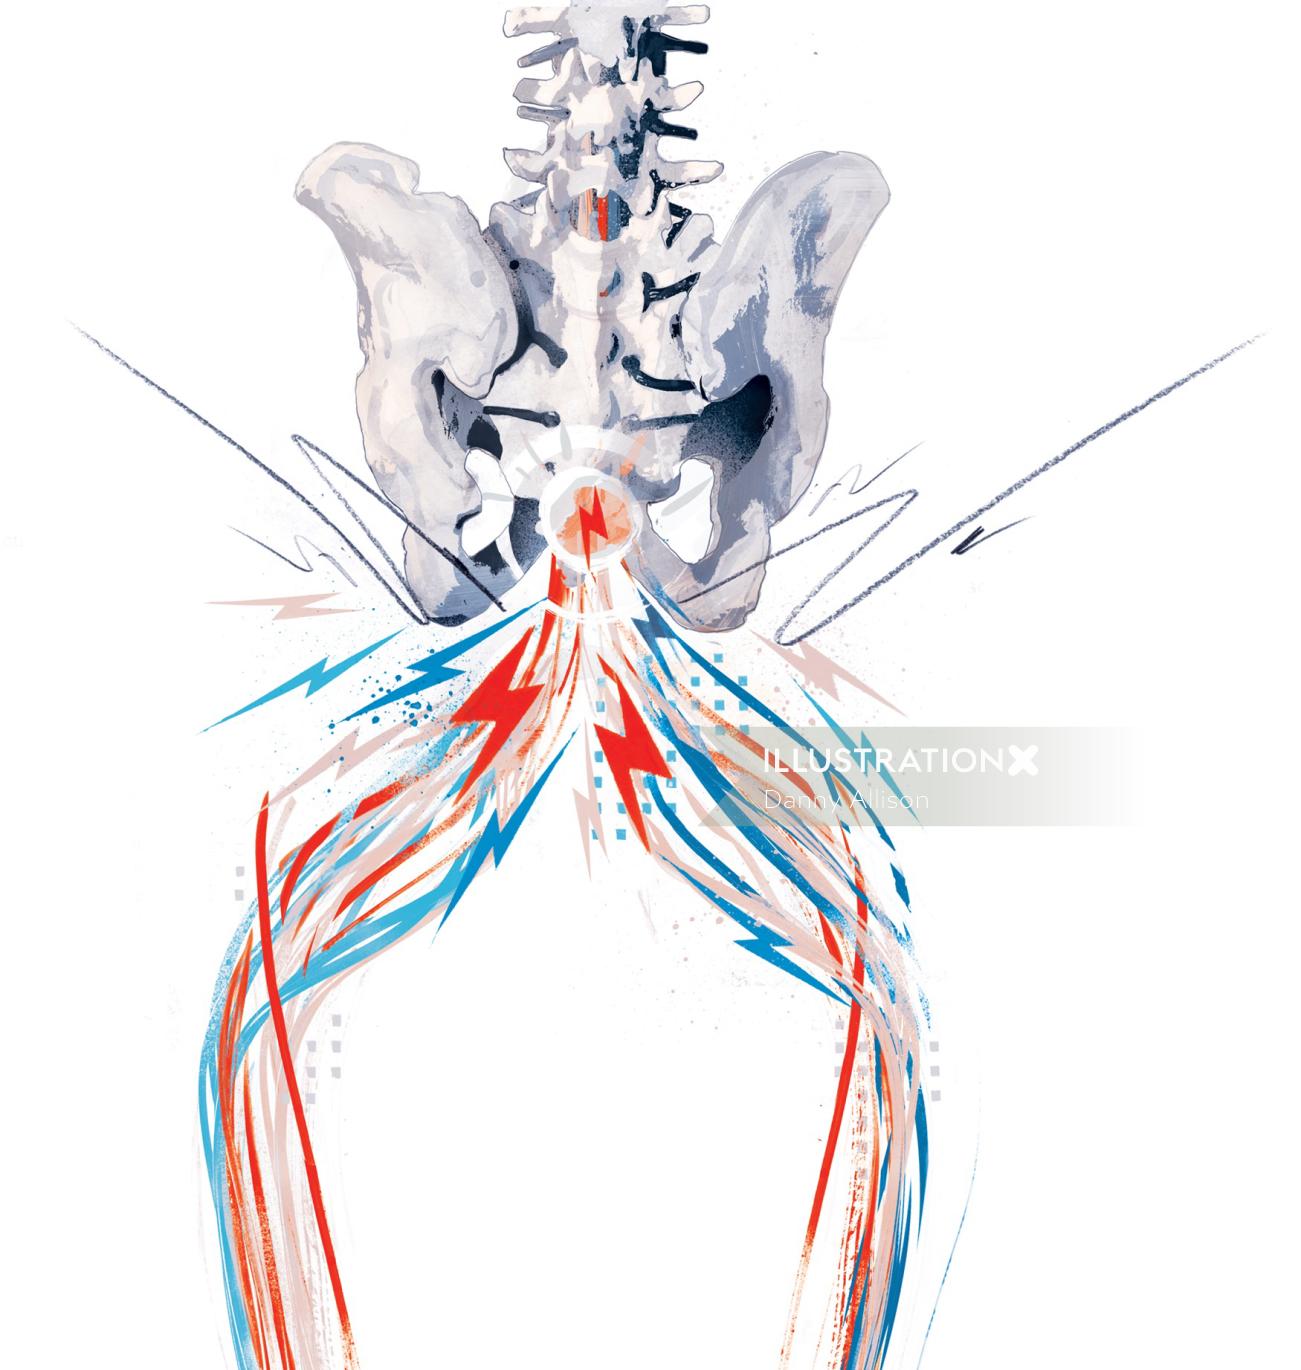 medical bone spine spinal column back illustration. electric impulses sending signals from the brain